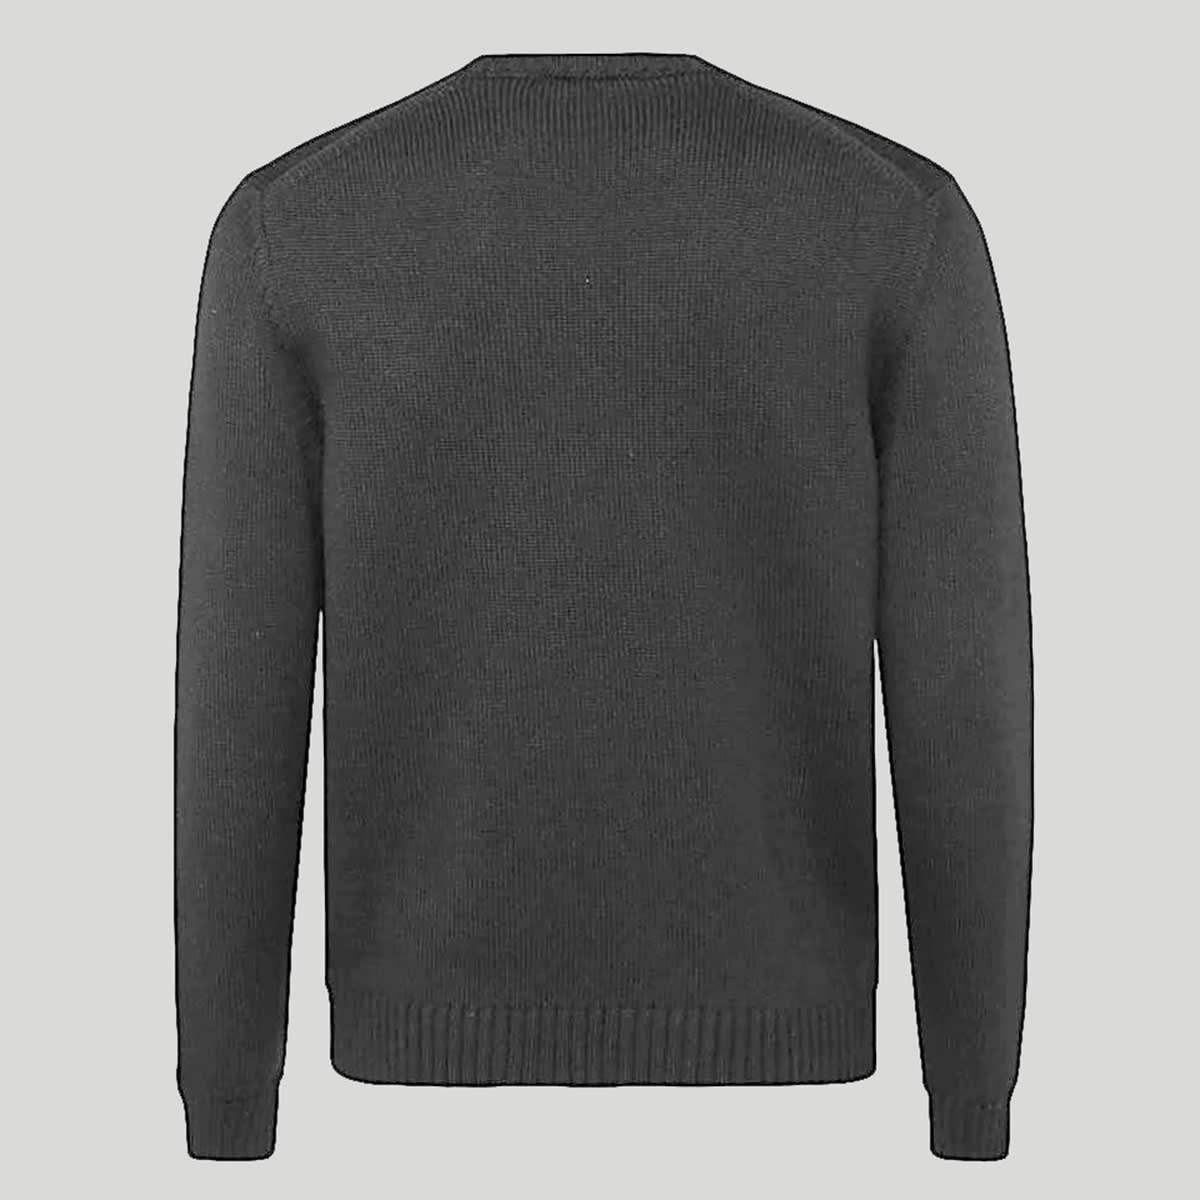 Shop Zanone Grey Wool Sweater In Antracite